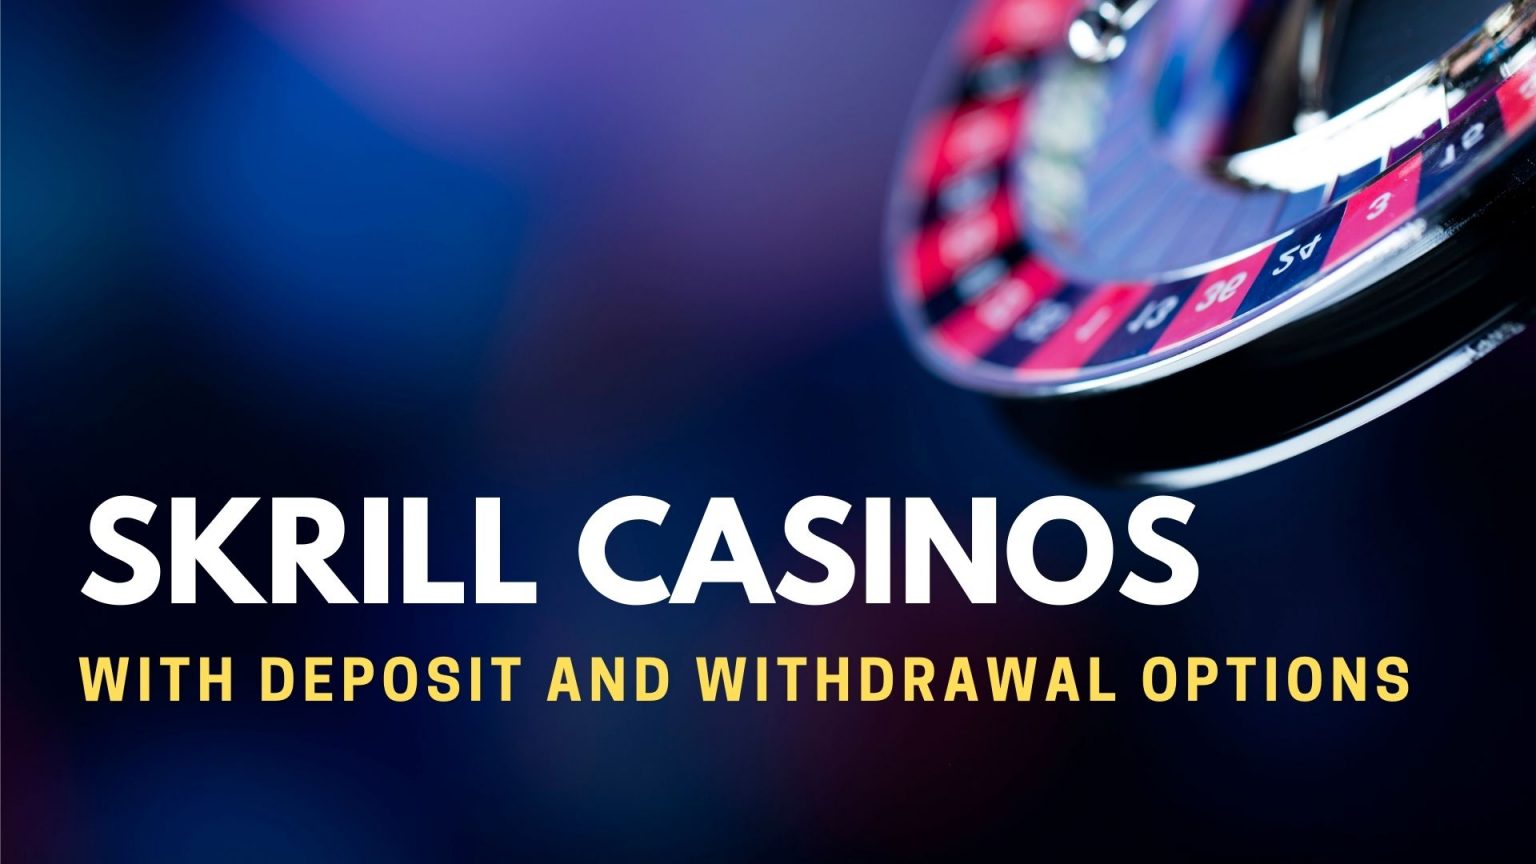 online casinos usa players small deposit